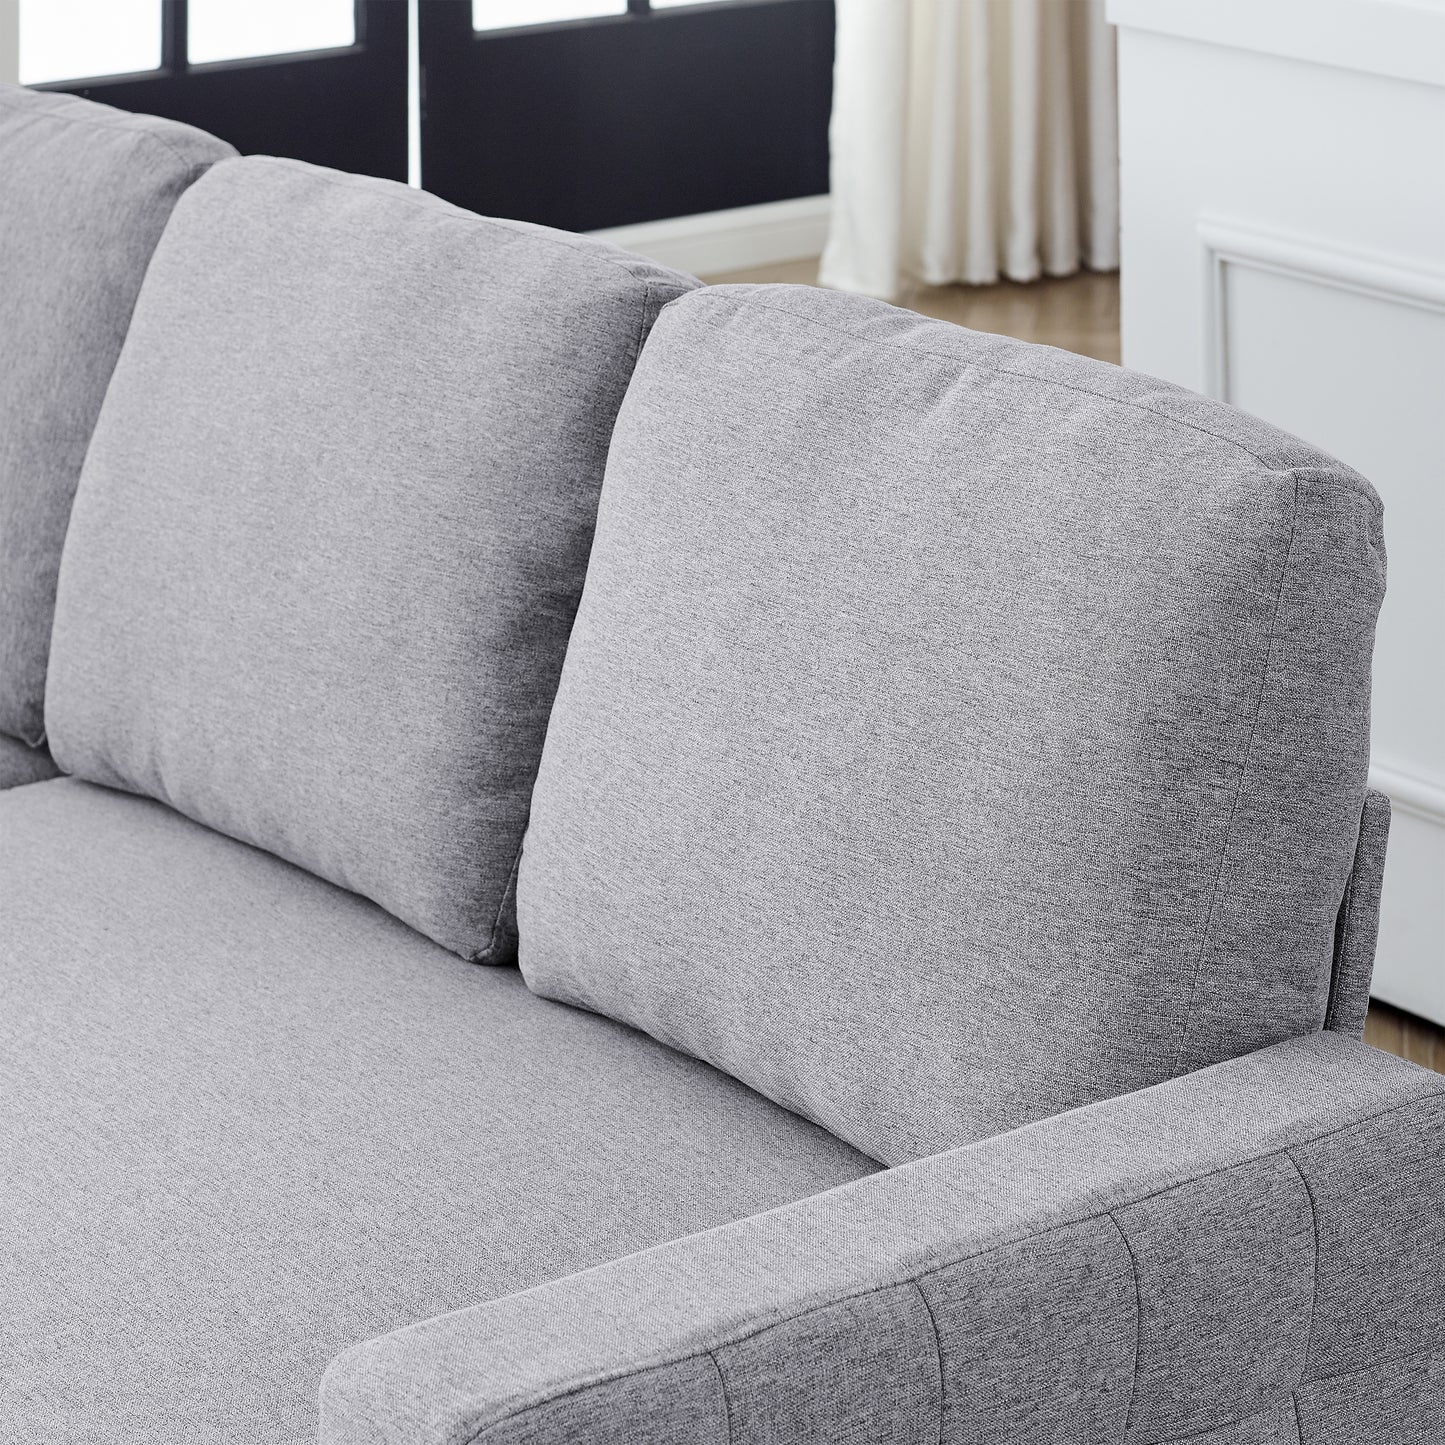 Reversible Sleeper Sofa Bed, Living Room Sets